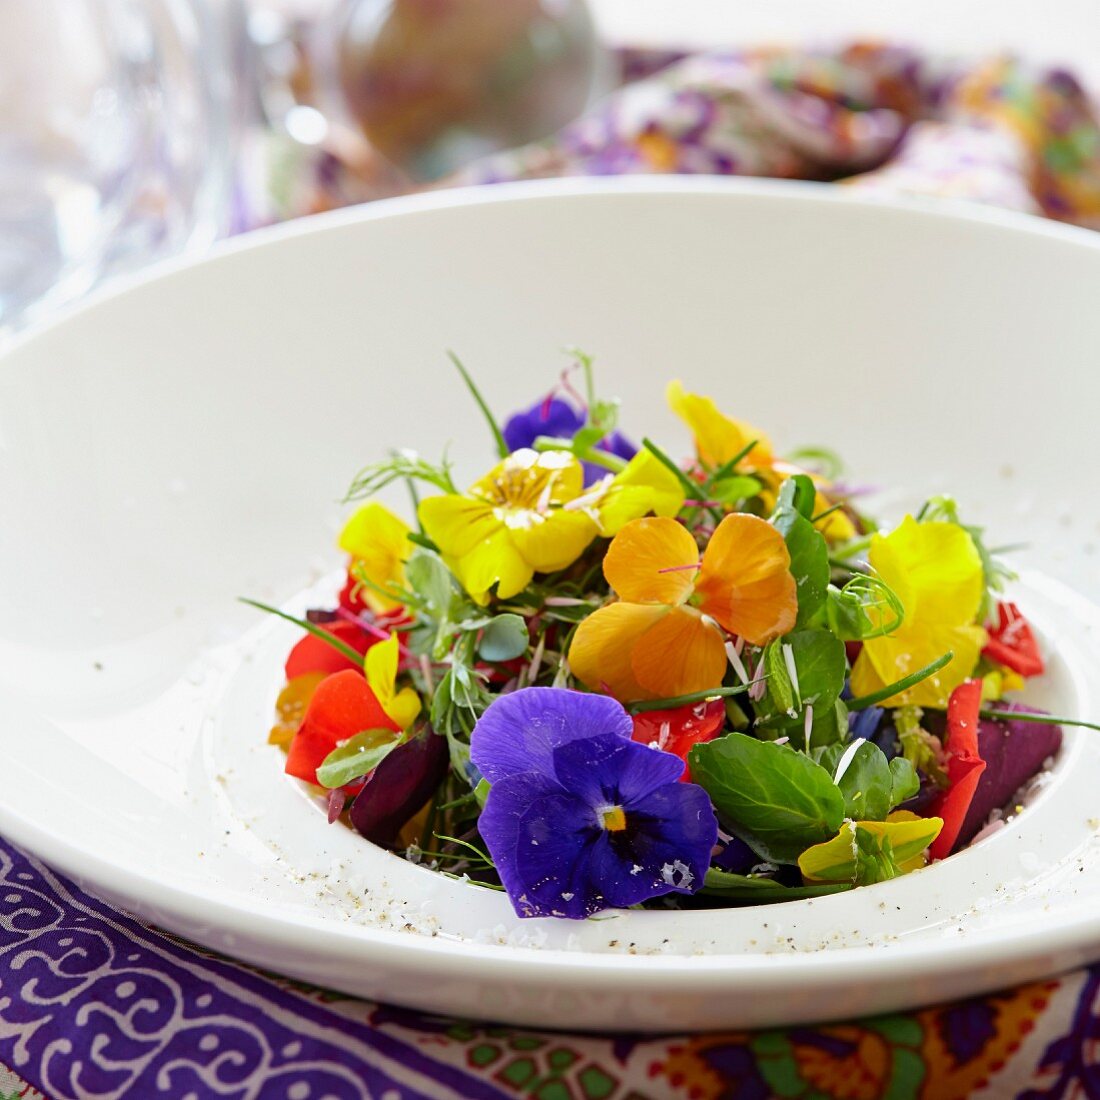 A colourful edible flower & herb salad